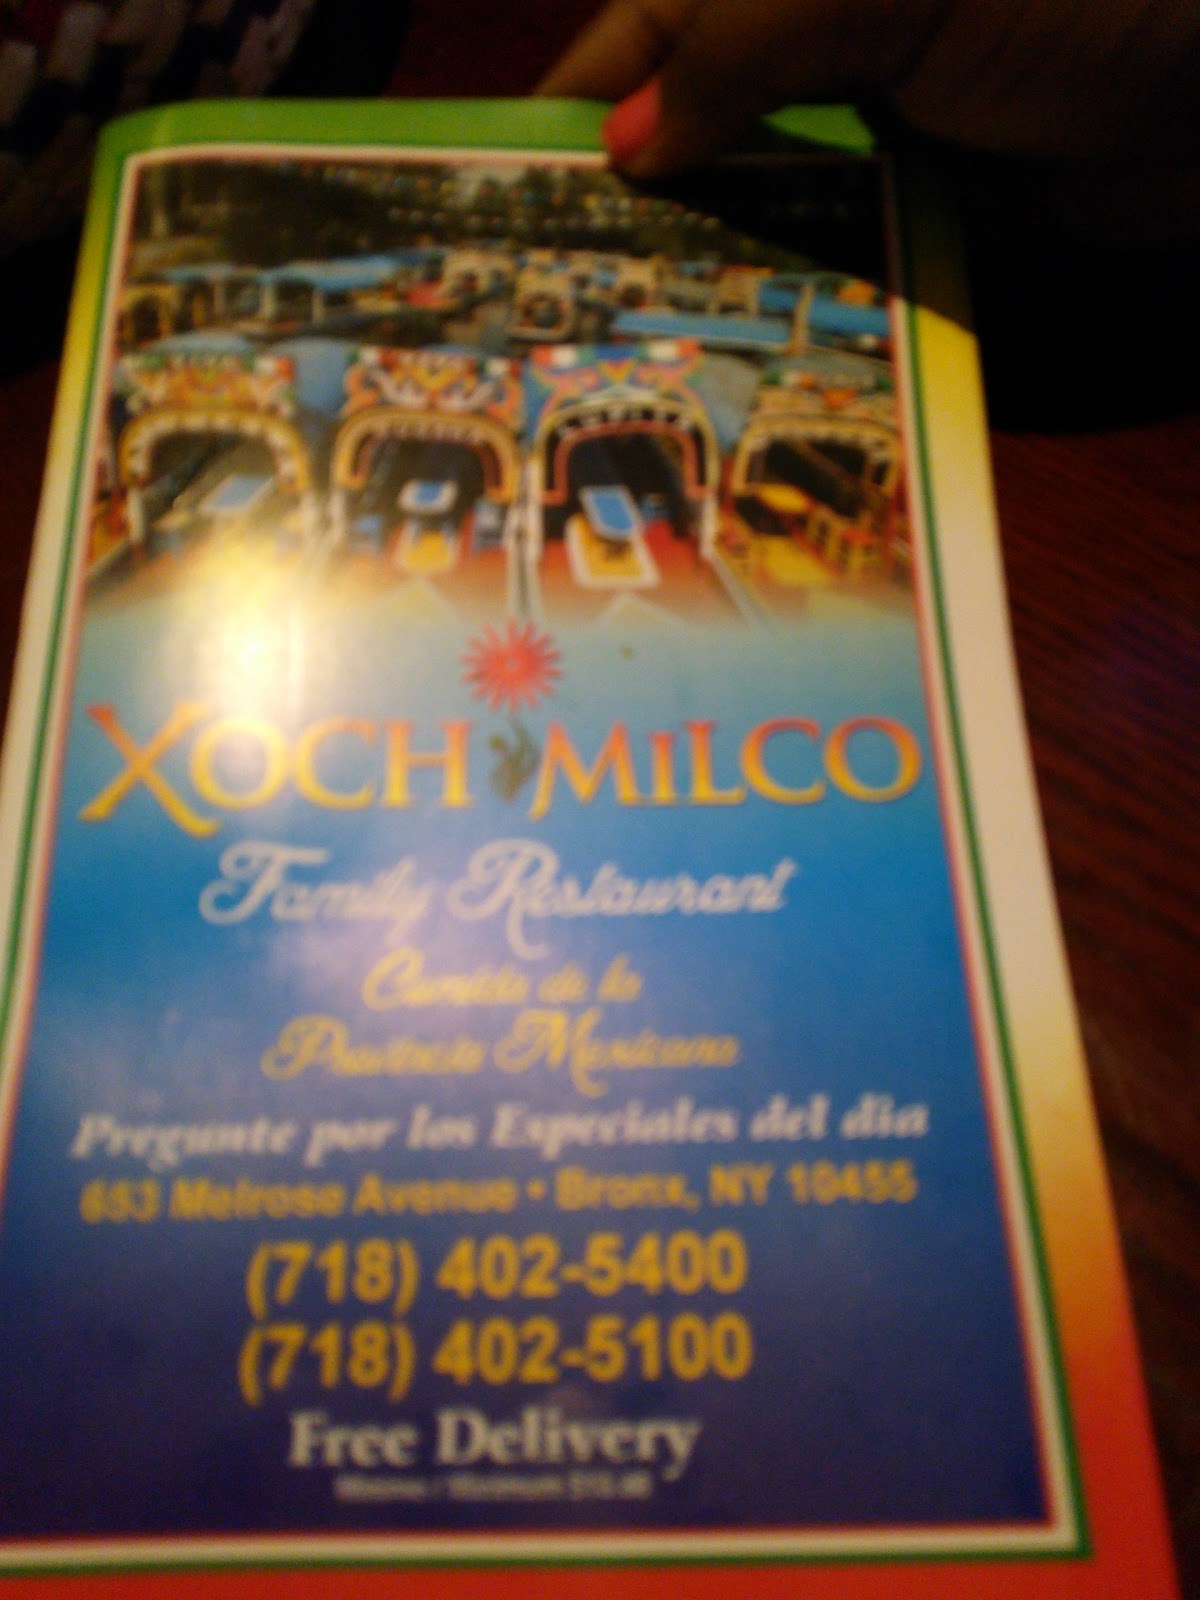 Photo of Xochimilco Family Restaurant in Bronx City, New York, United States - 3 Picture of Restaurant, Food, Point of interest, Establishment